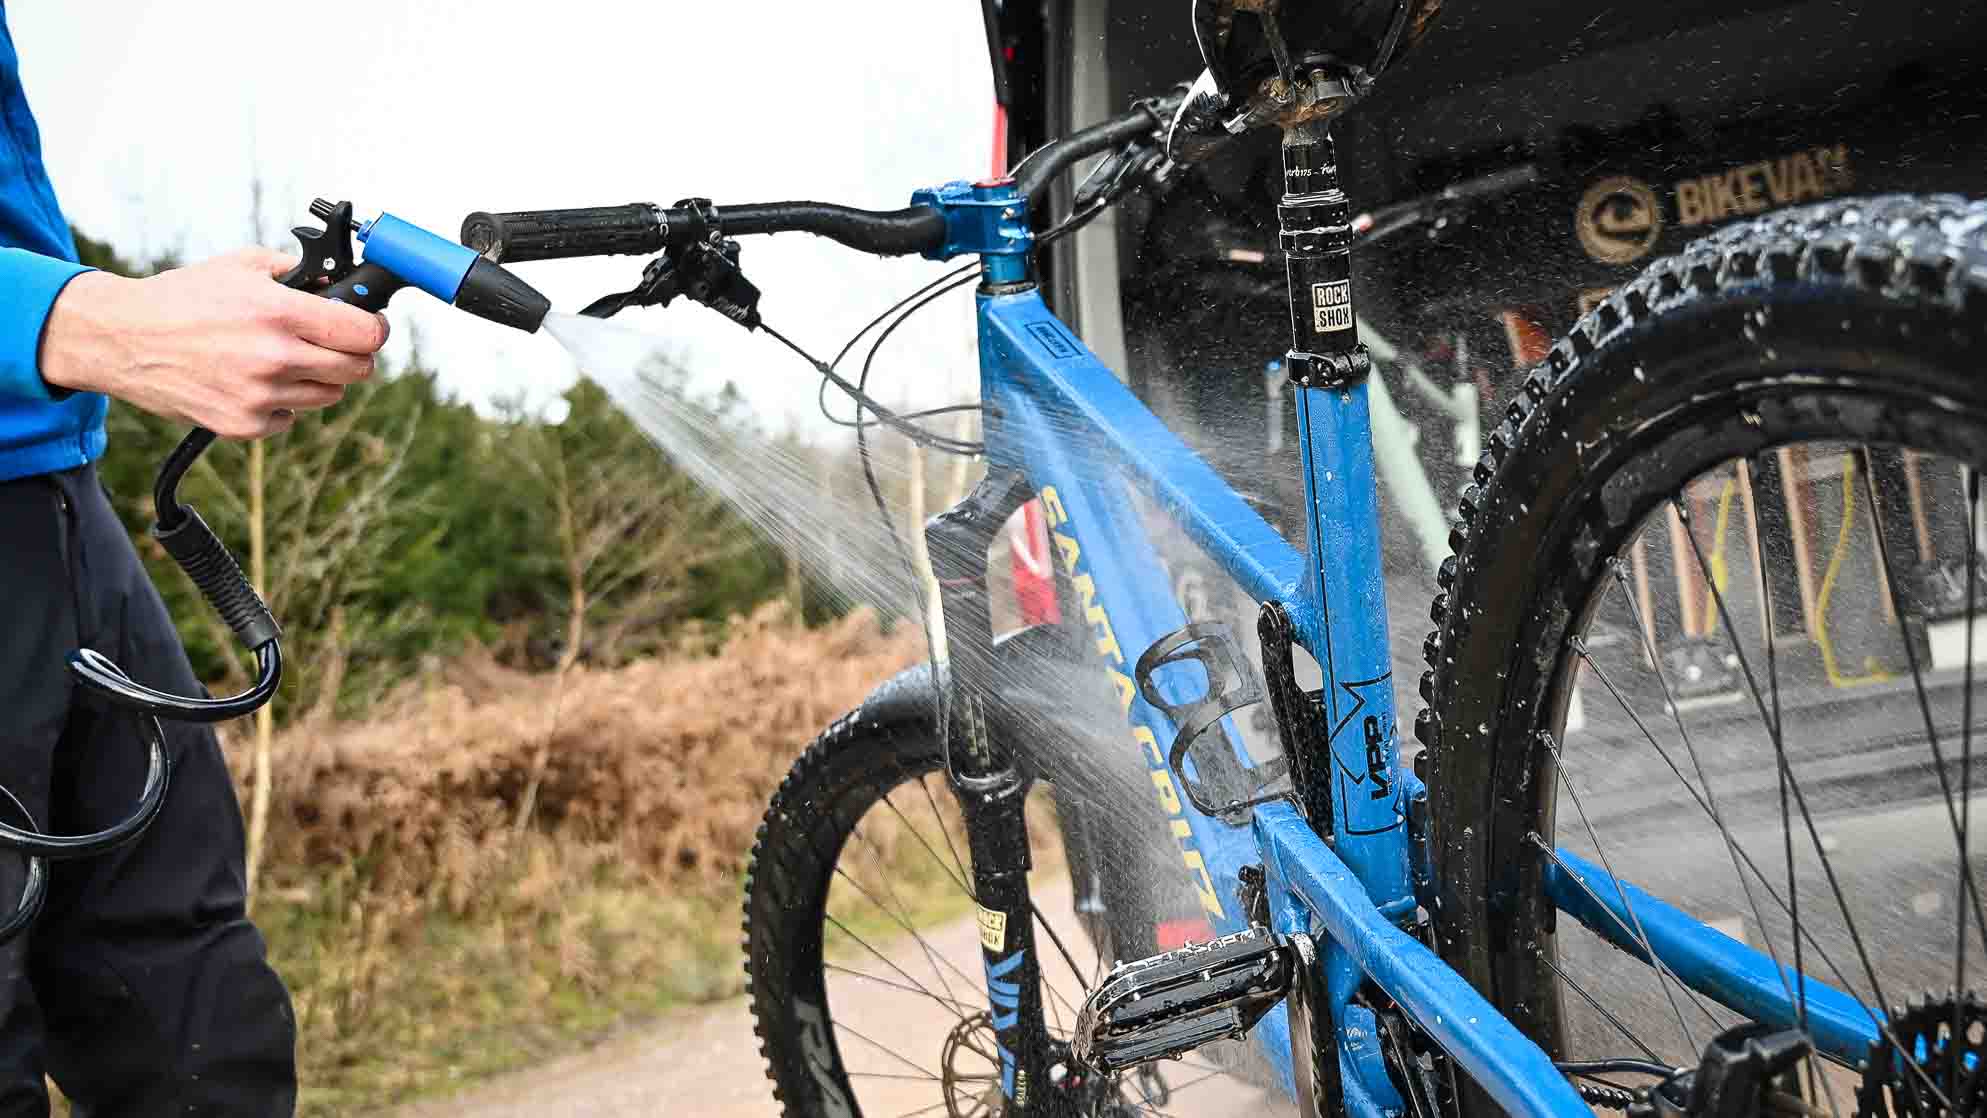 Spraying down a bike